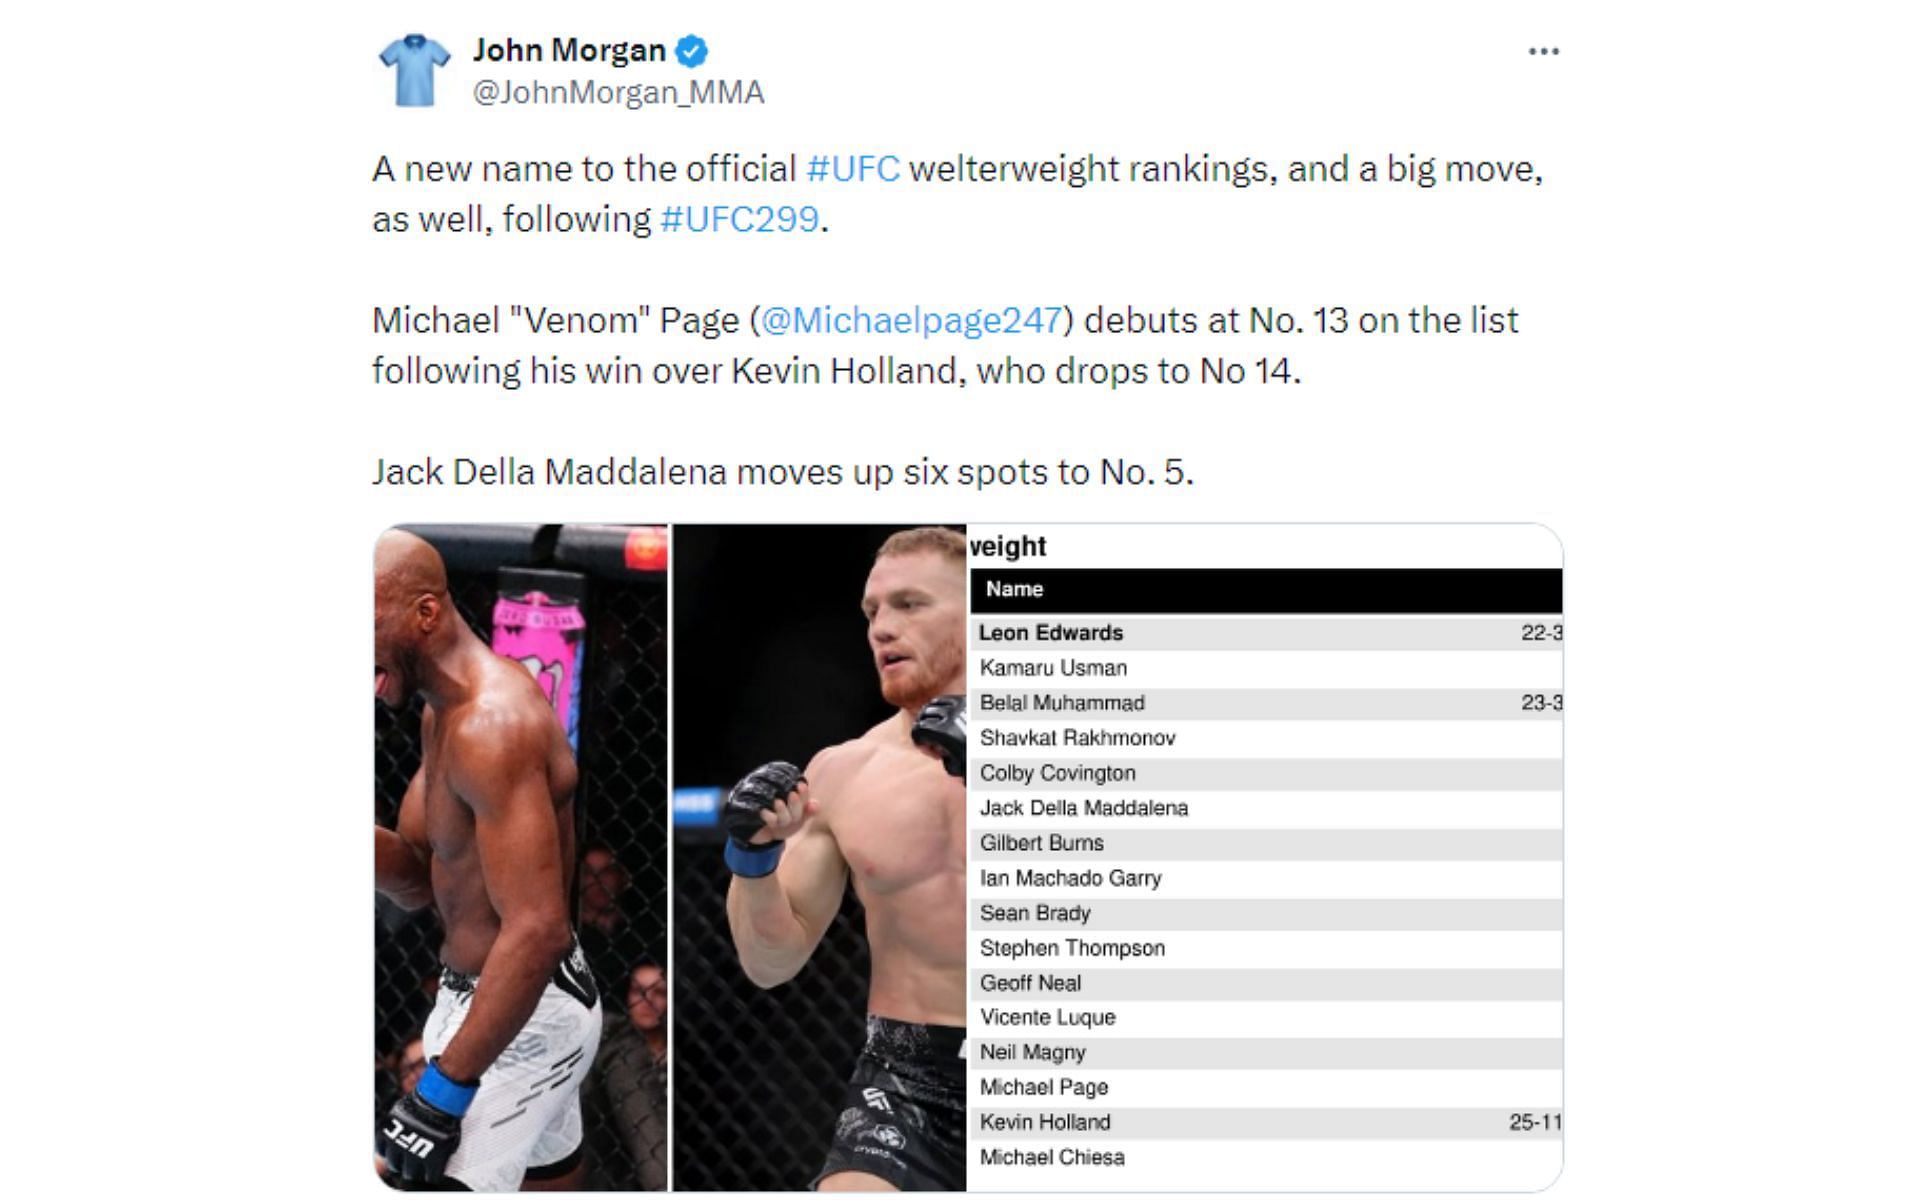 Tweet regarding updated UFC welterweight rankings [Image courtesy: @JohnMorgan_MMA - X]